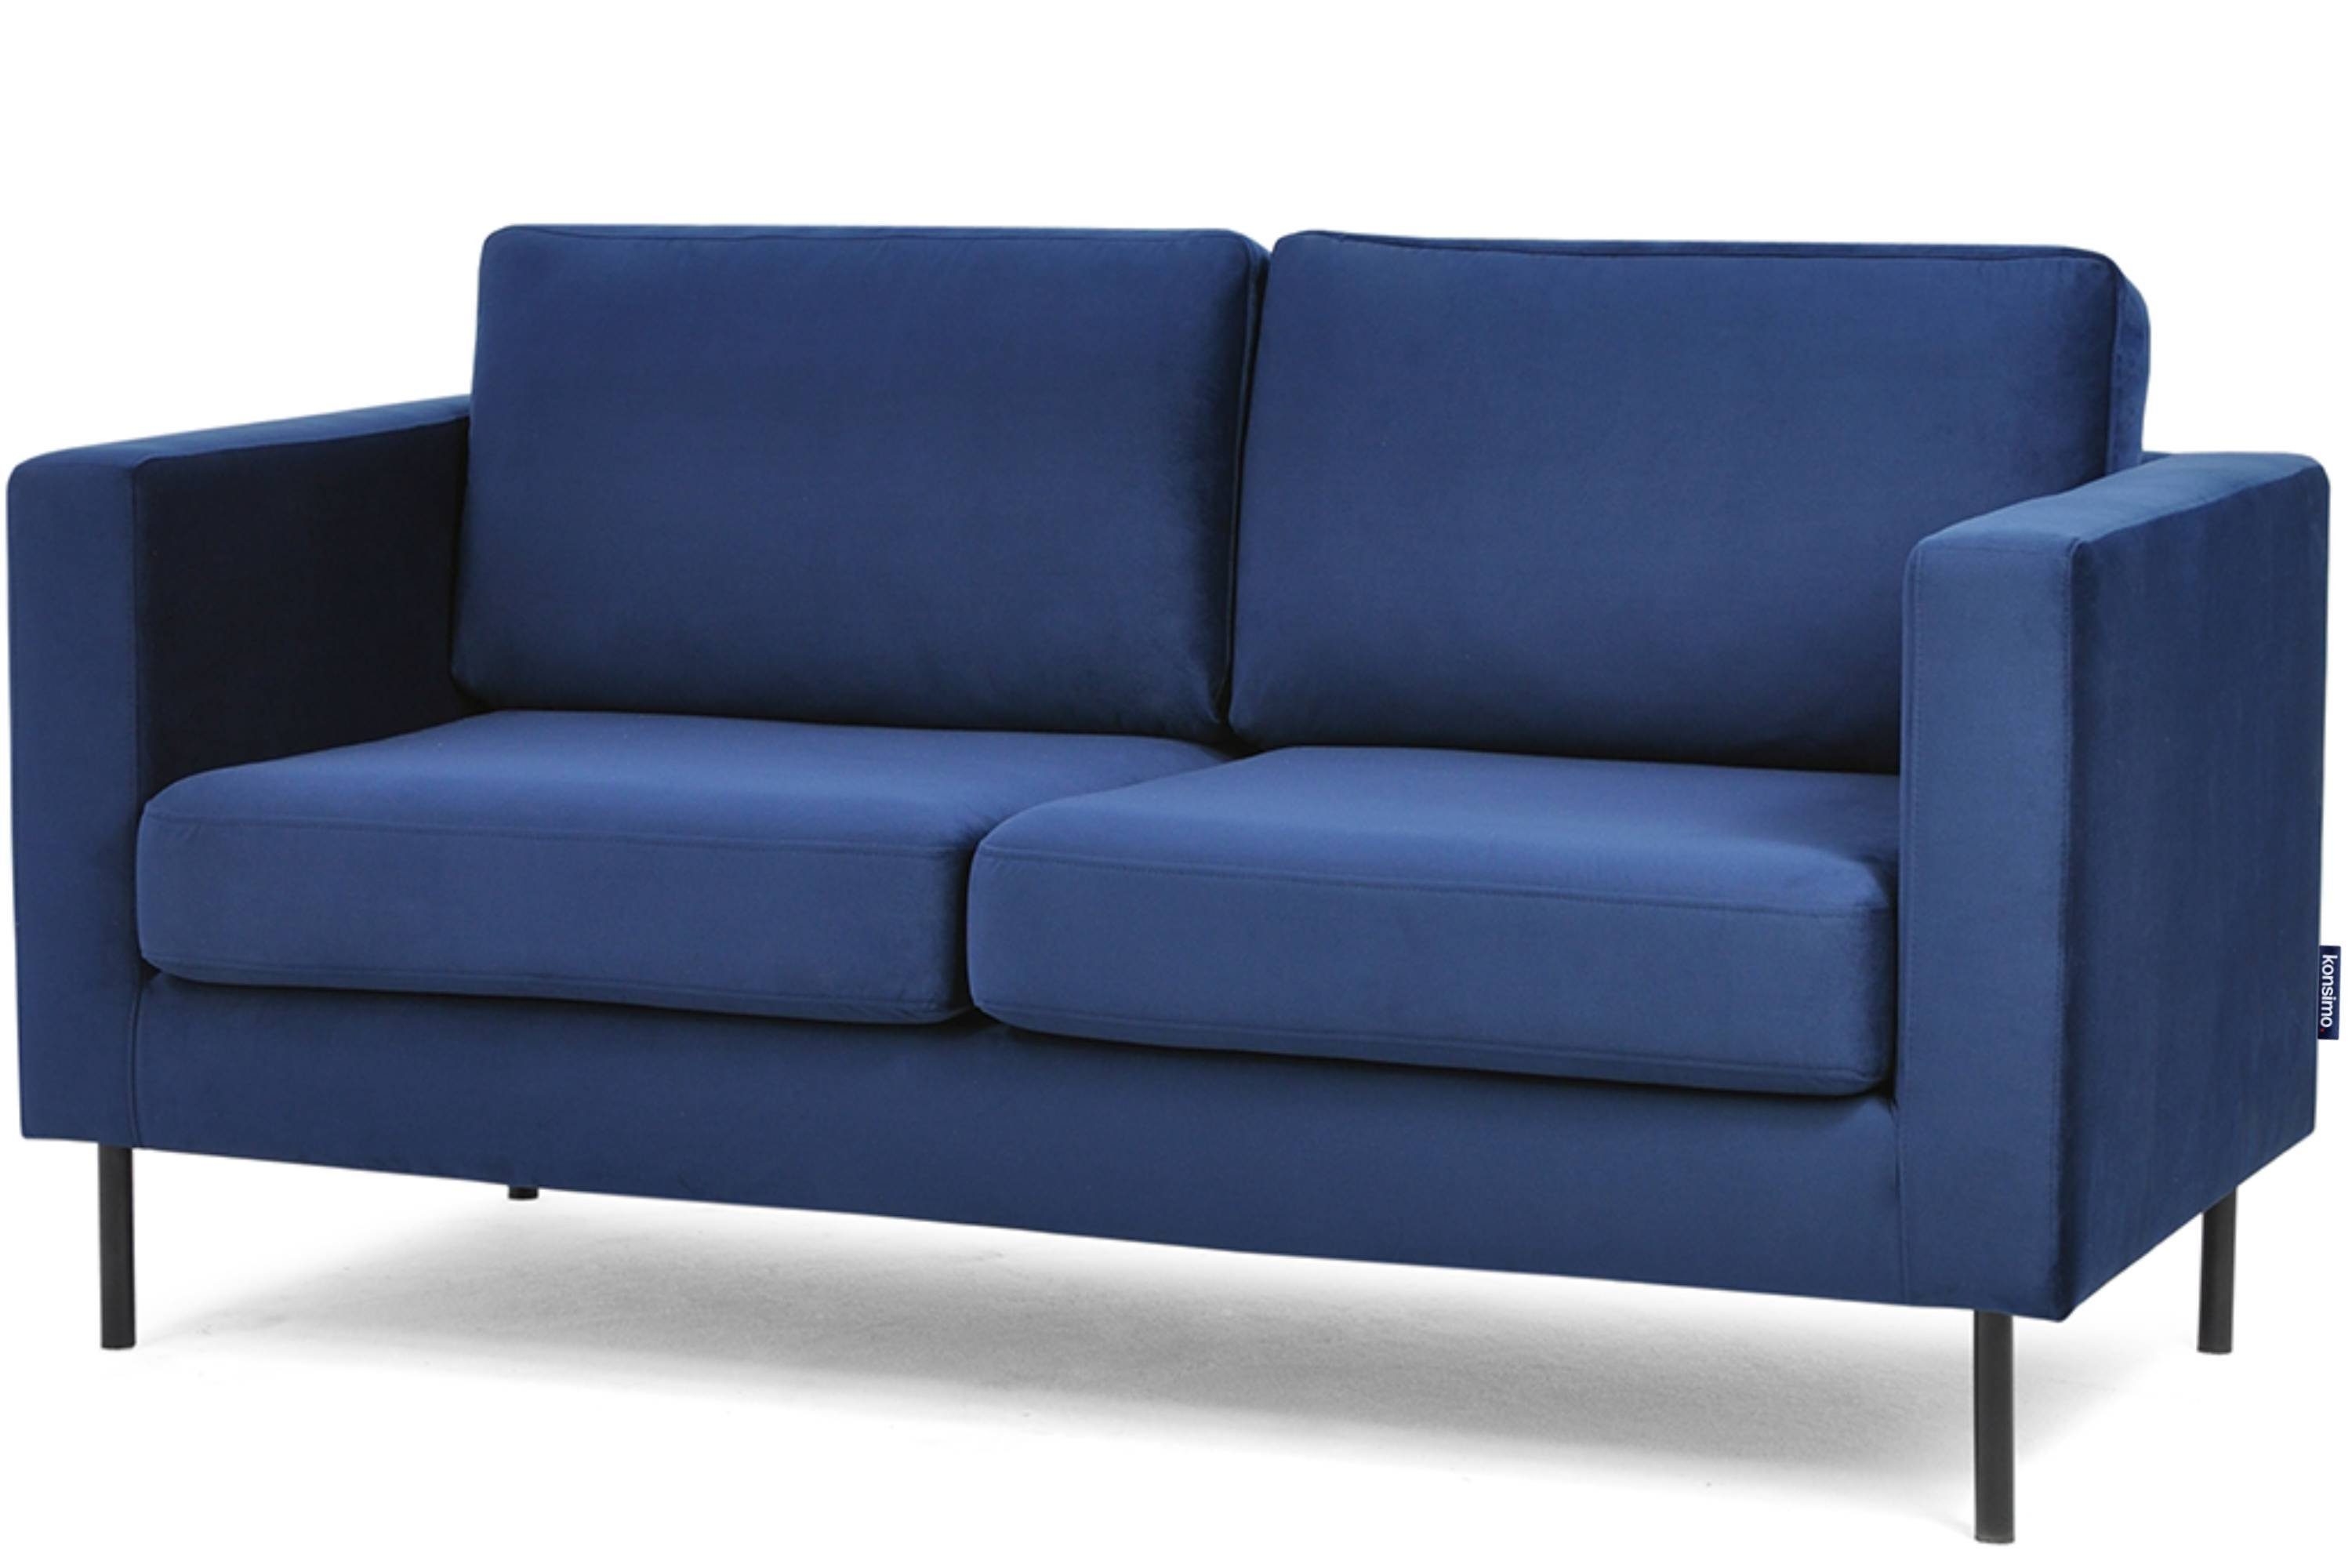 2 TOZZI | | universelles Beine, marineblau Personen, hohe marineblau Design Konsimo marineblau Sofa 2-Sitzer